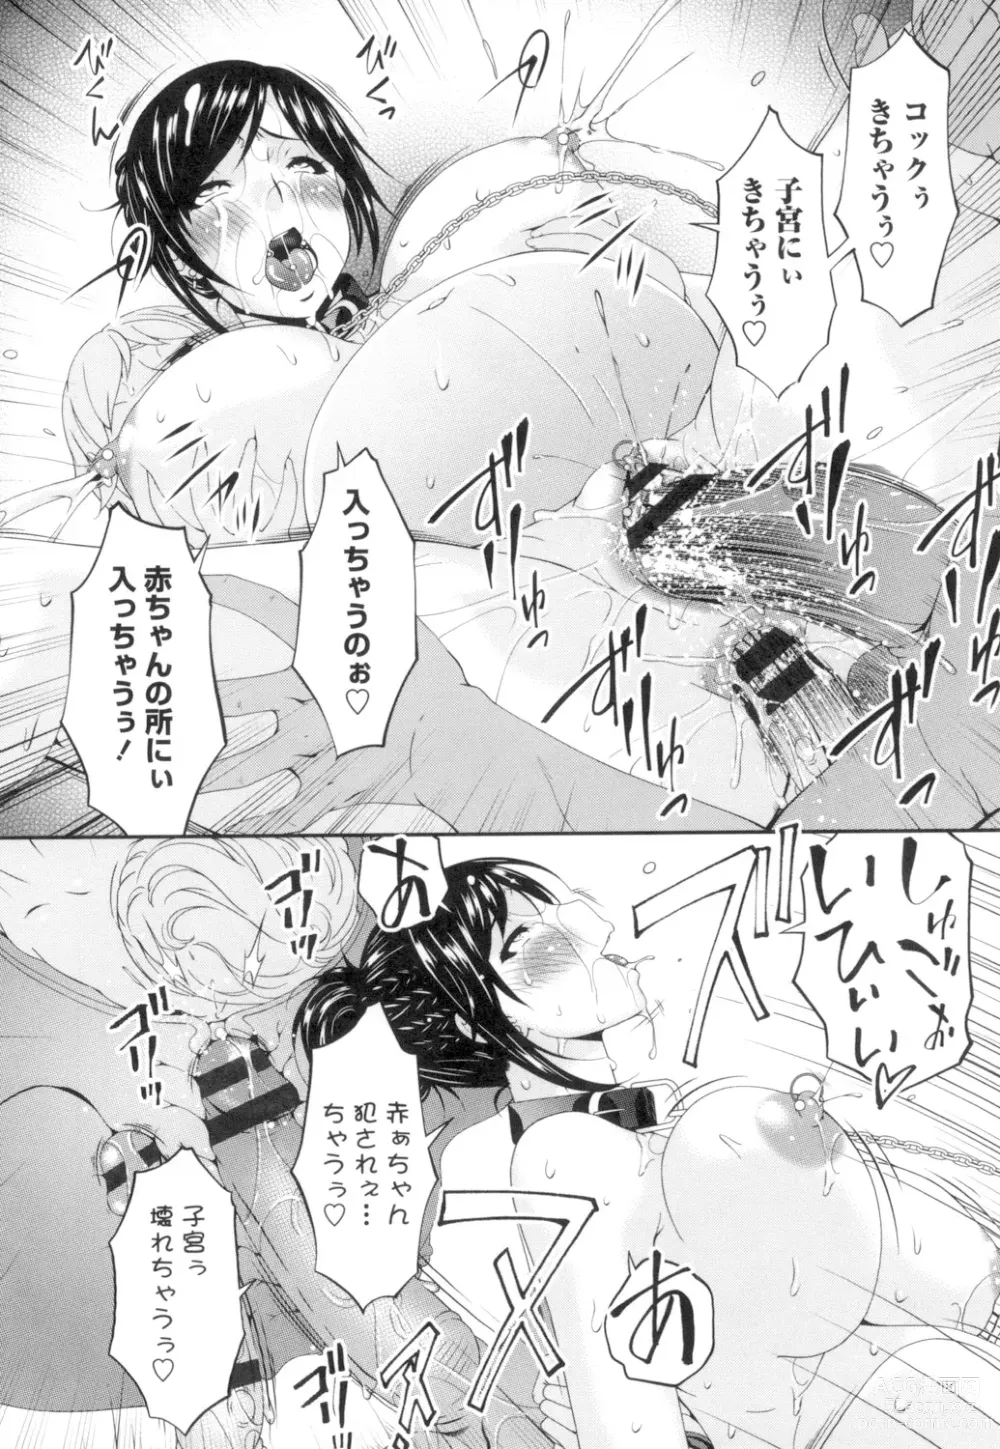 Page 235 of manga Youbo